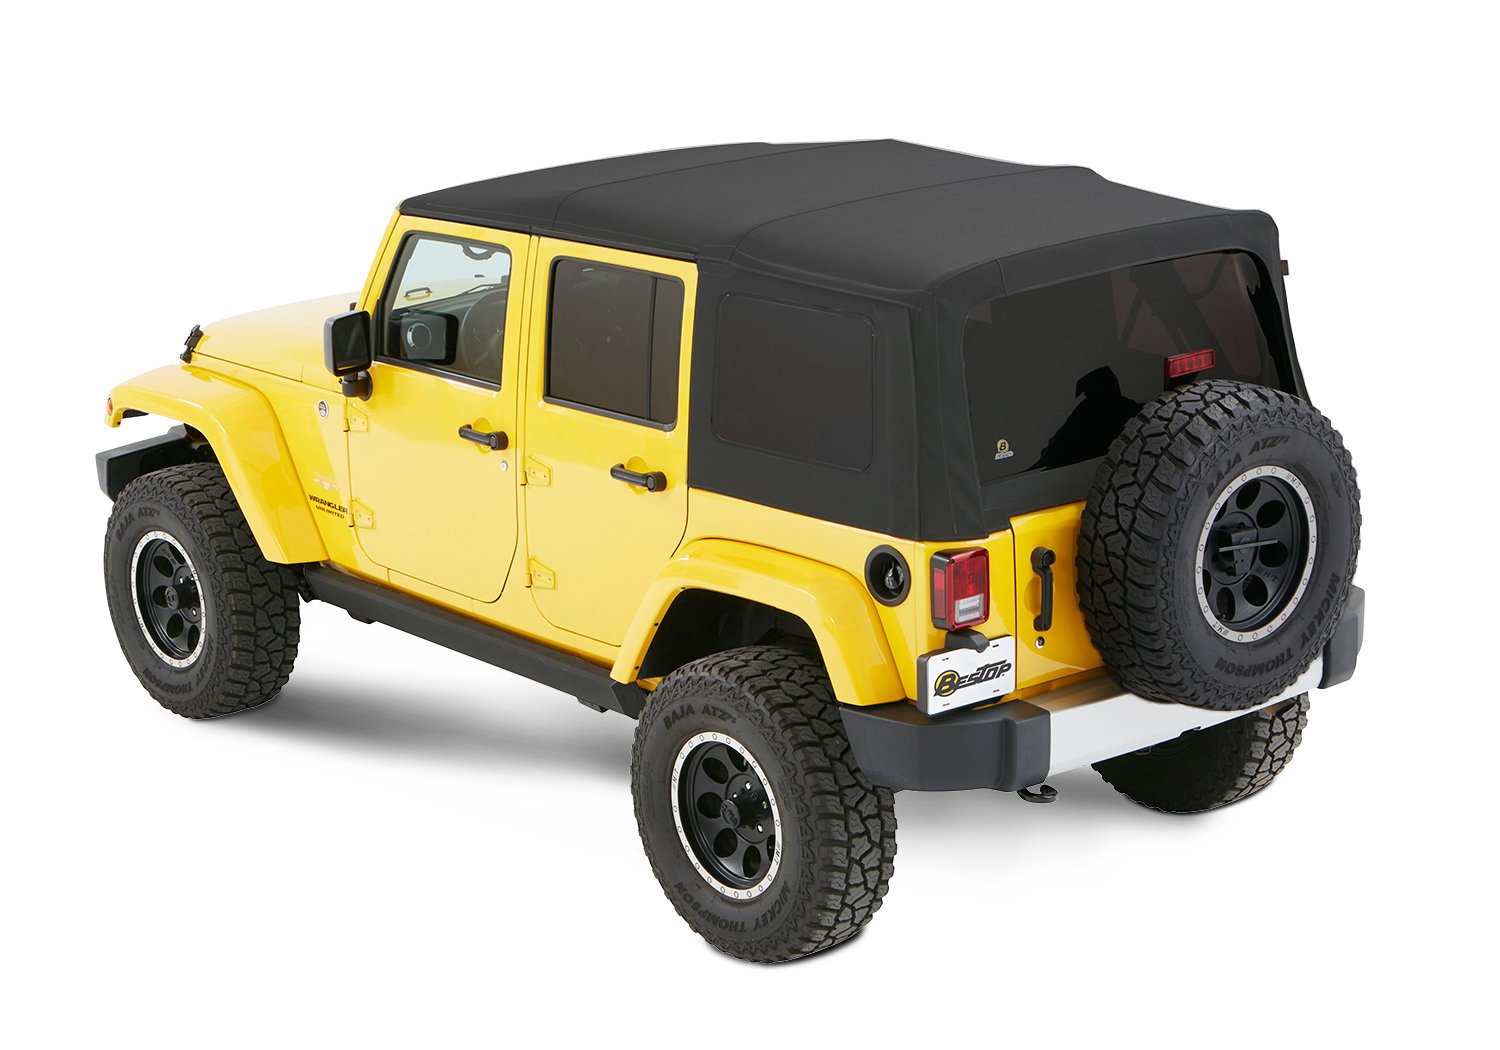 Bestop Supertop NX Twill Soft Top for 07-18 Jeep Wrangler Unlimited JK 4  Door | Quadratec